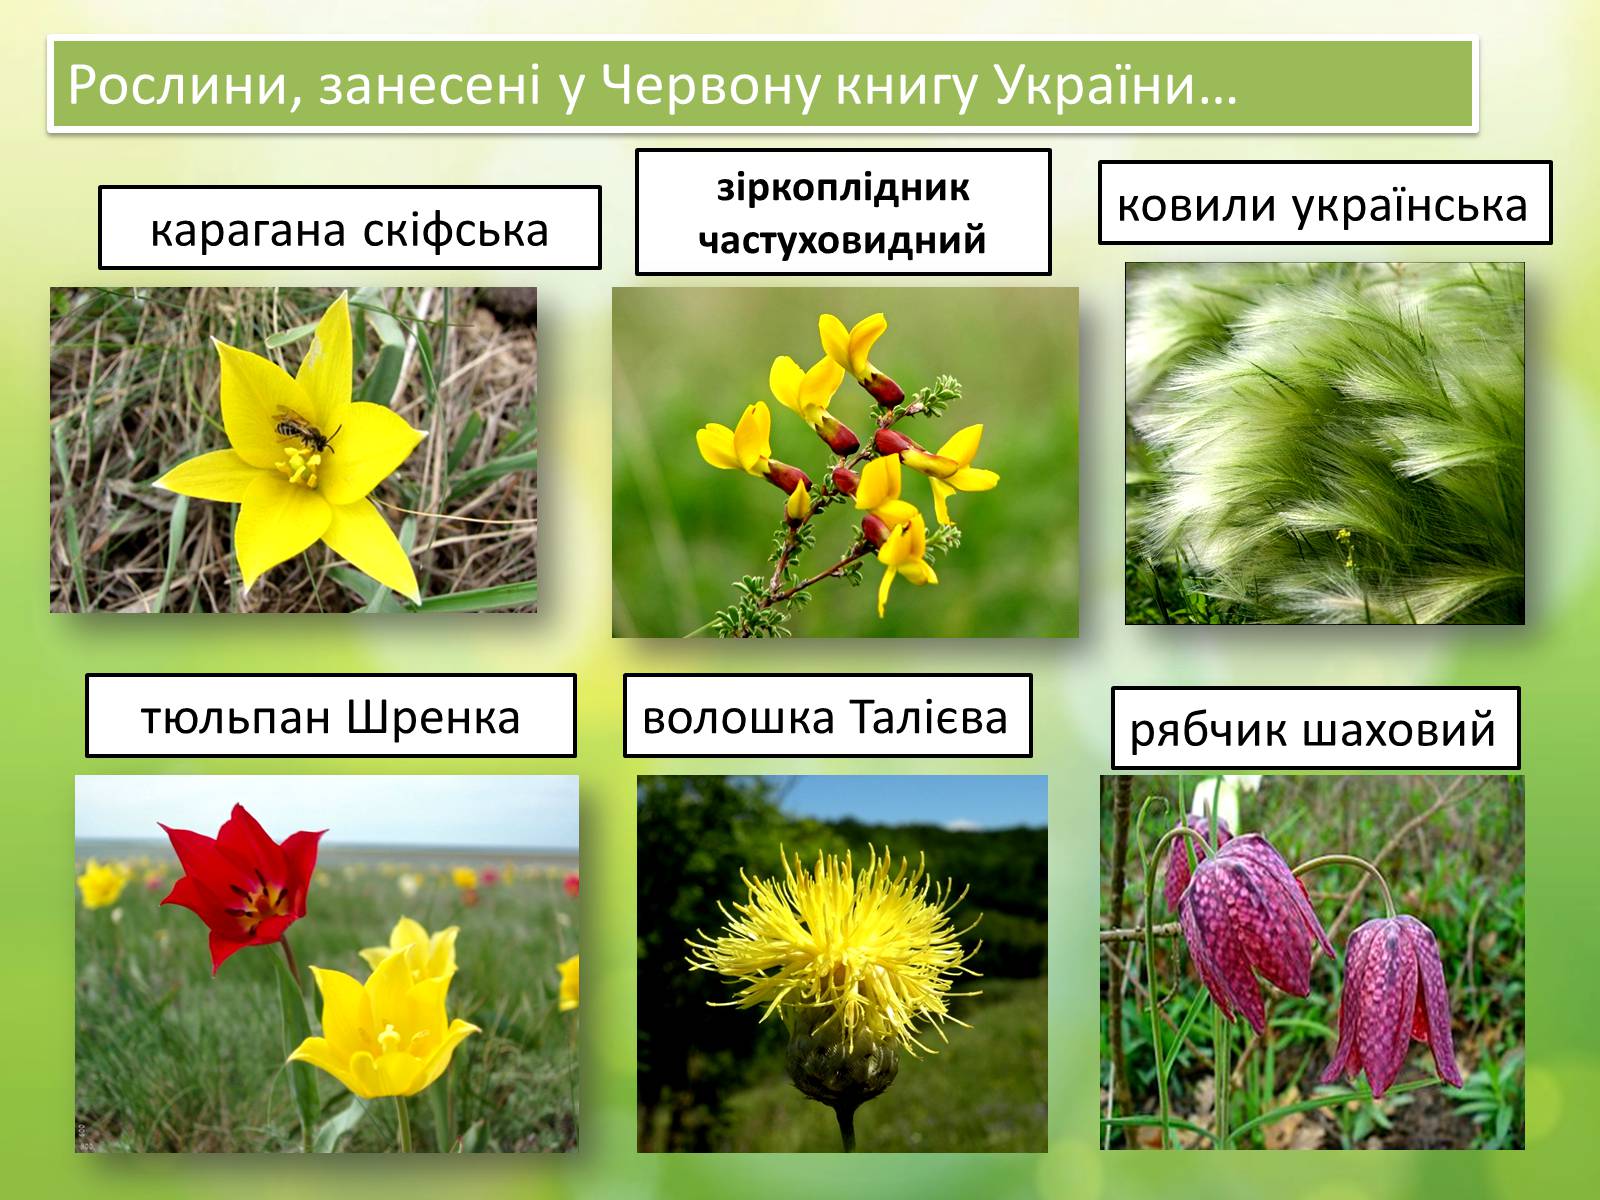 Рослини Червоної книги України